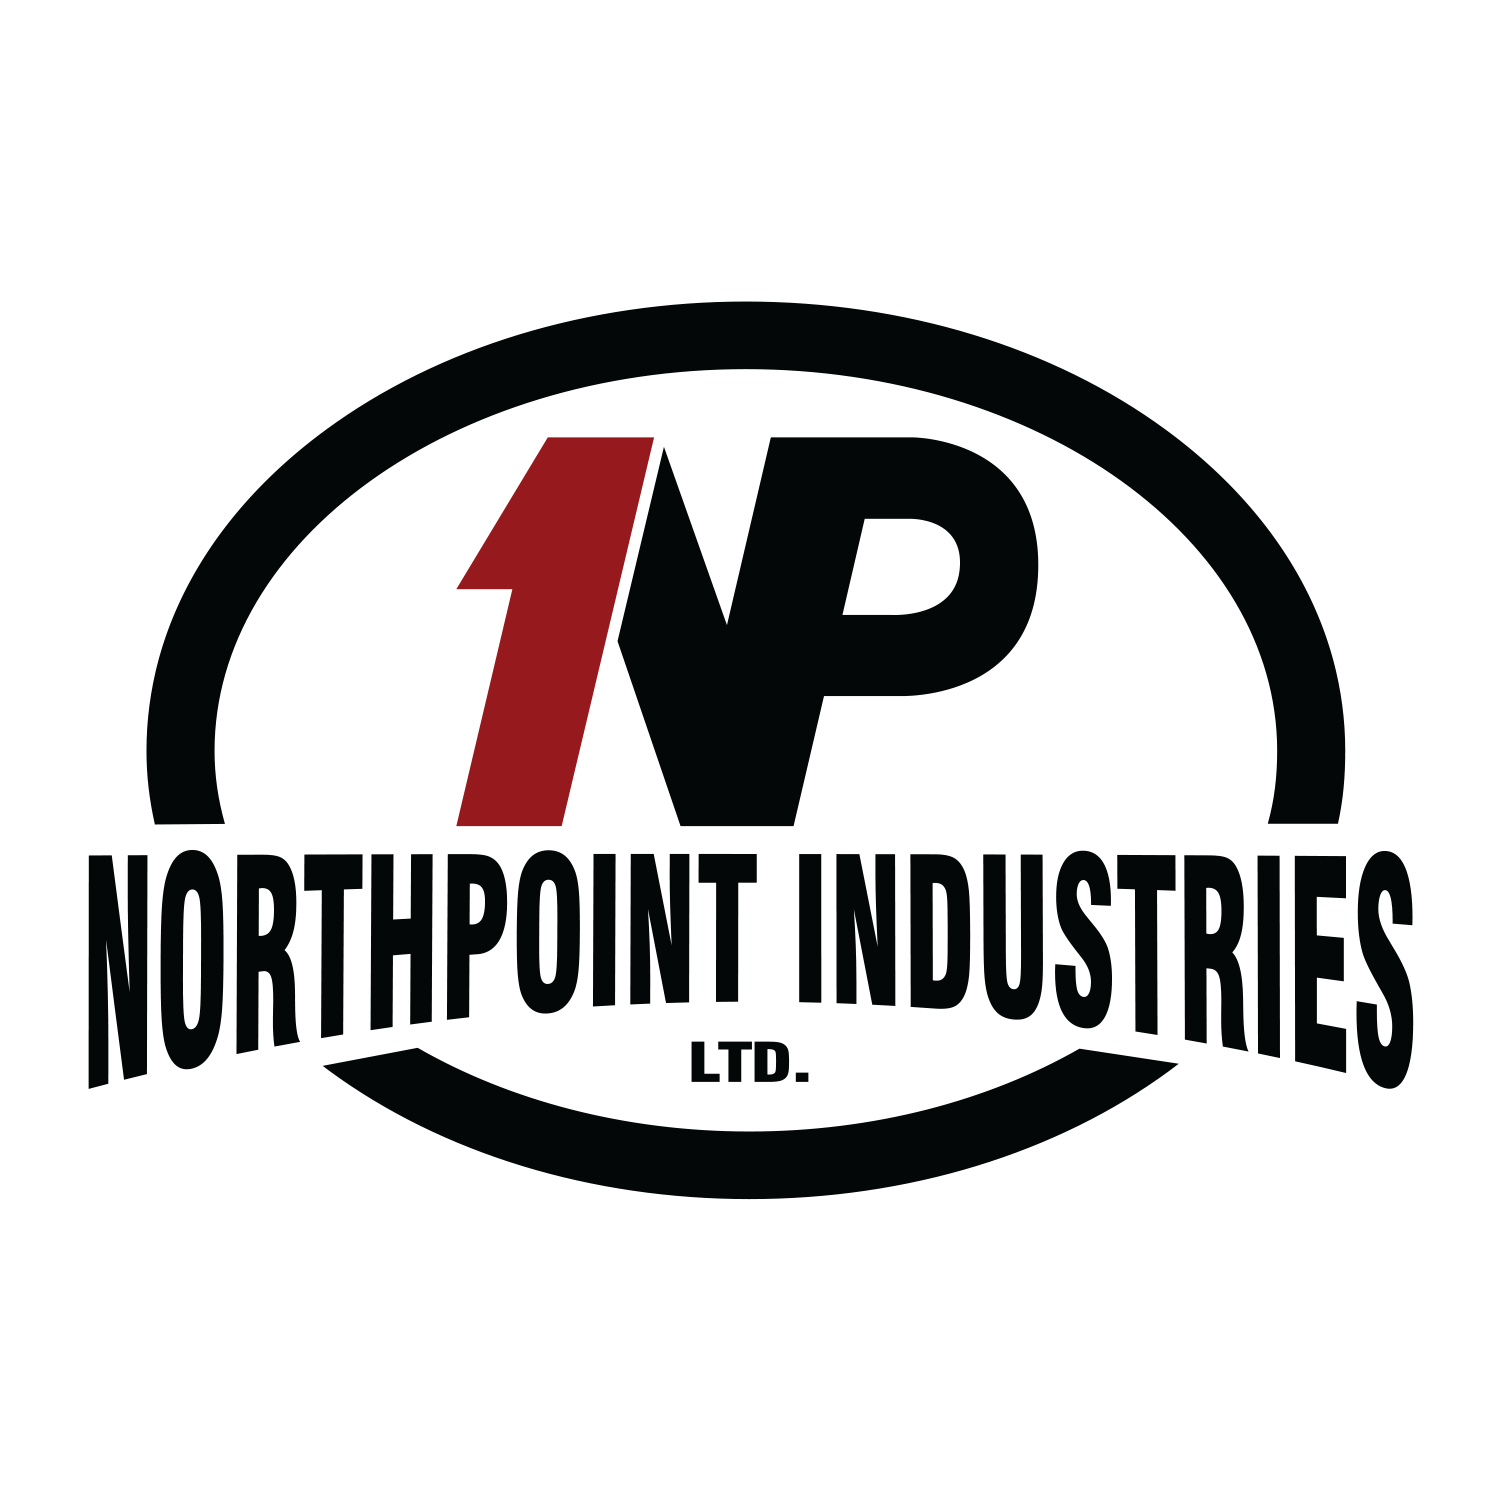 Northpoint Industries Ltd.